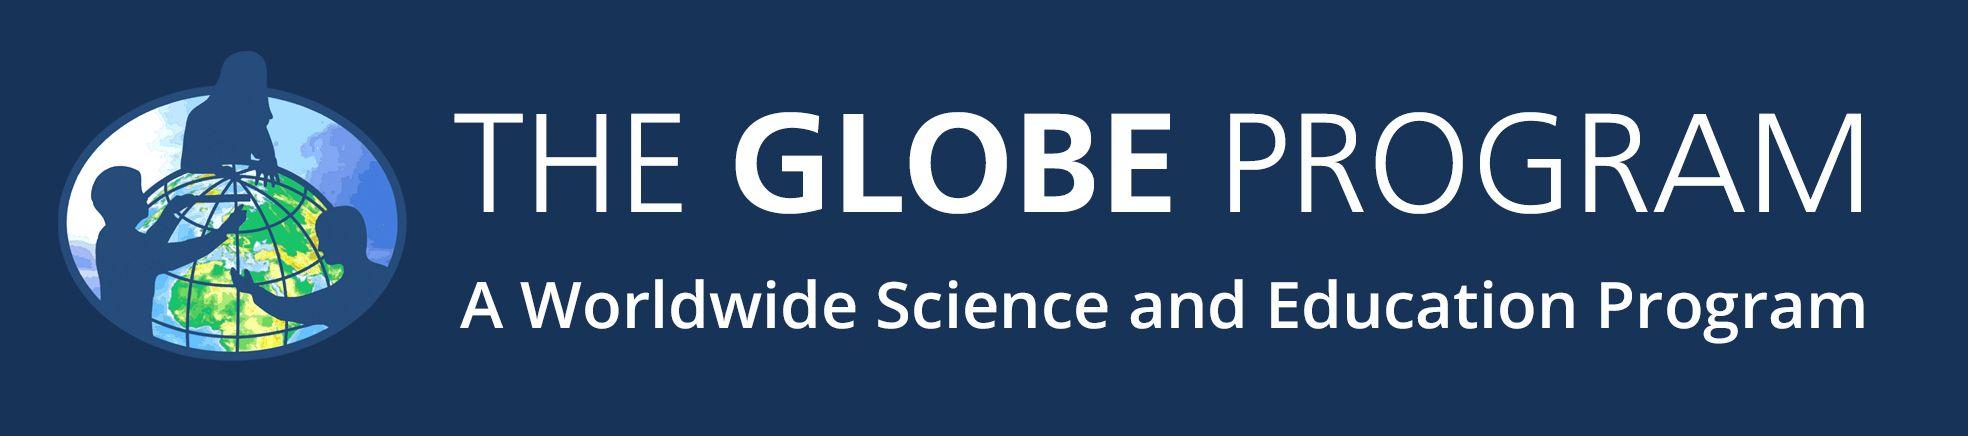 Education Globe Logo - GLOBE Logos - GLOBE.gov